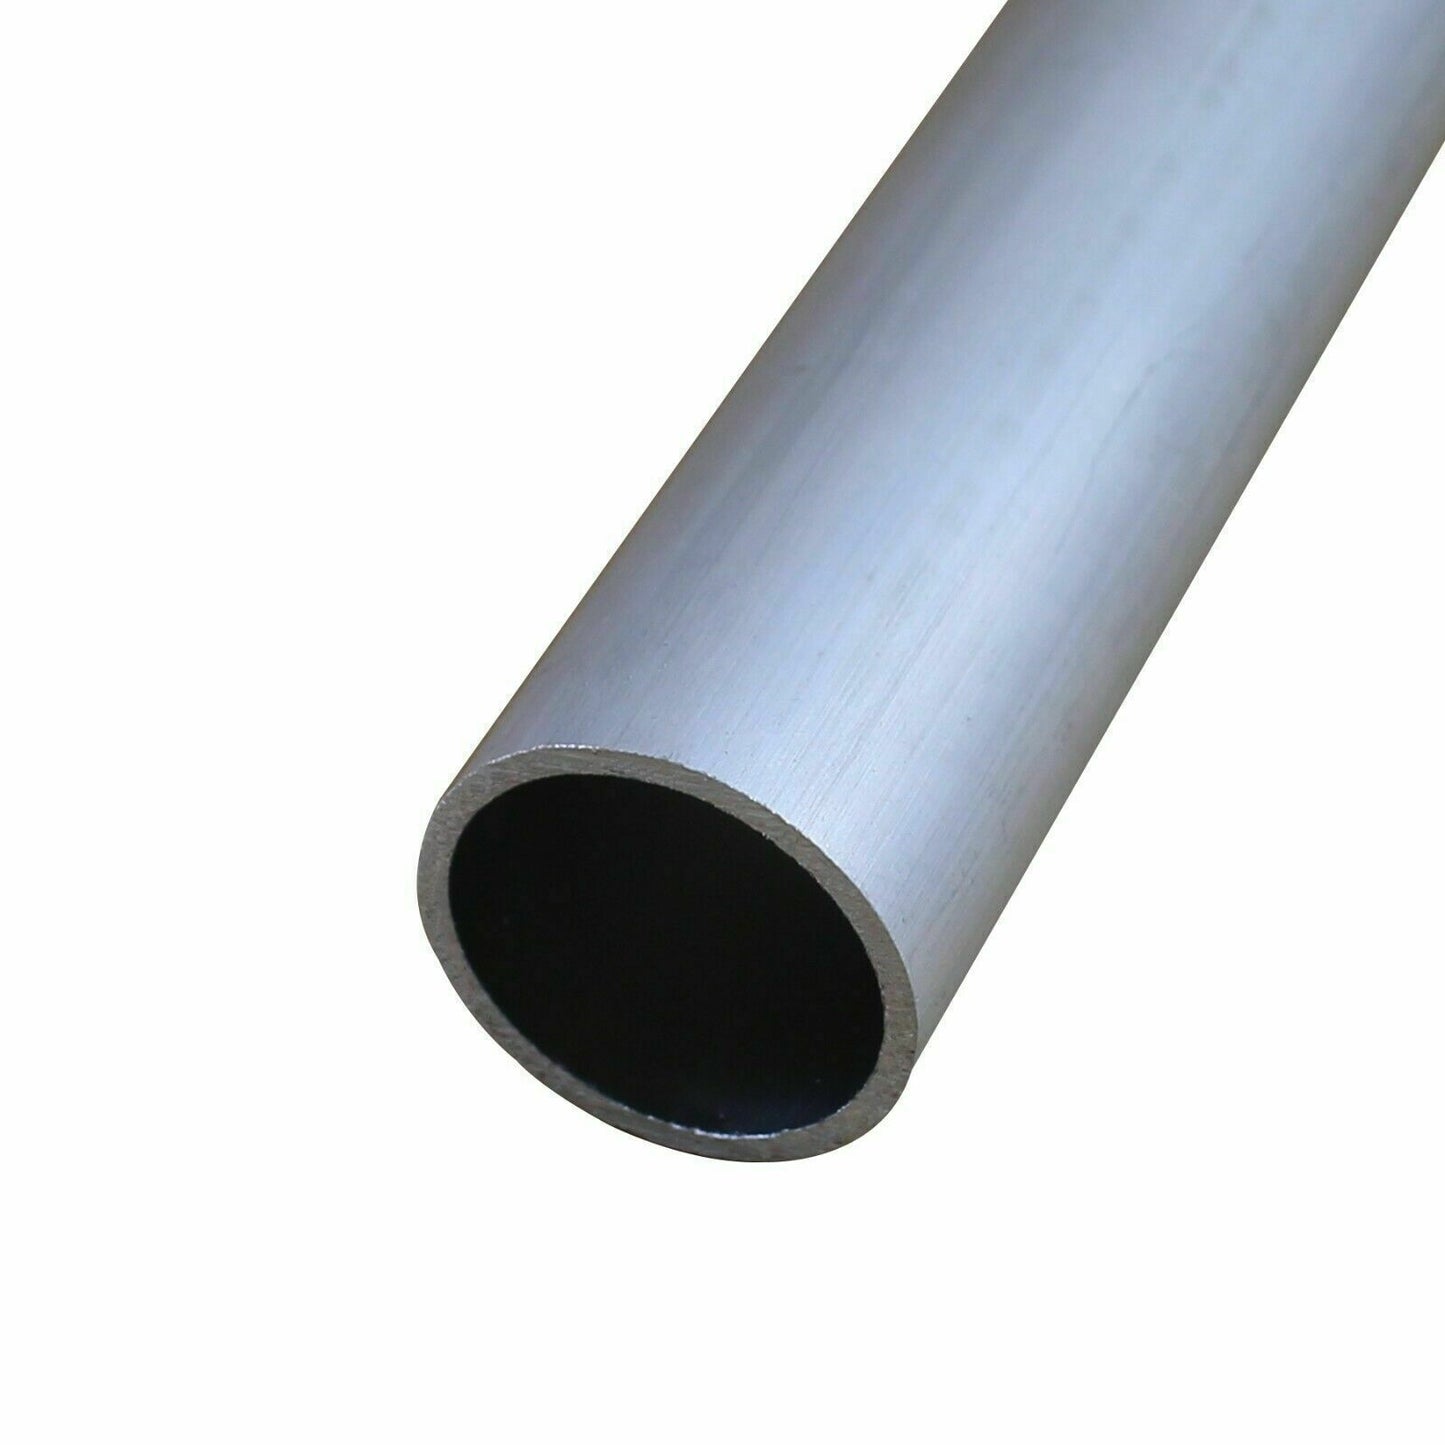 OD 24 mm ID 16 mm 1 pièce Tube rond en aluminium